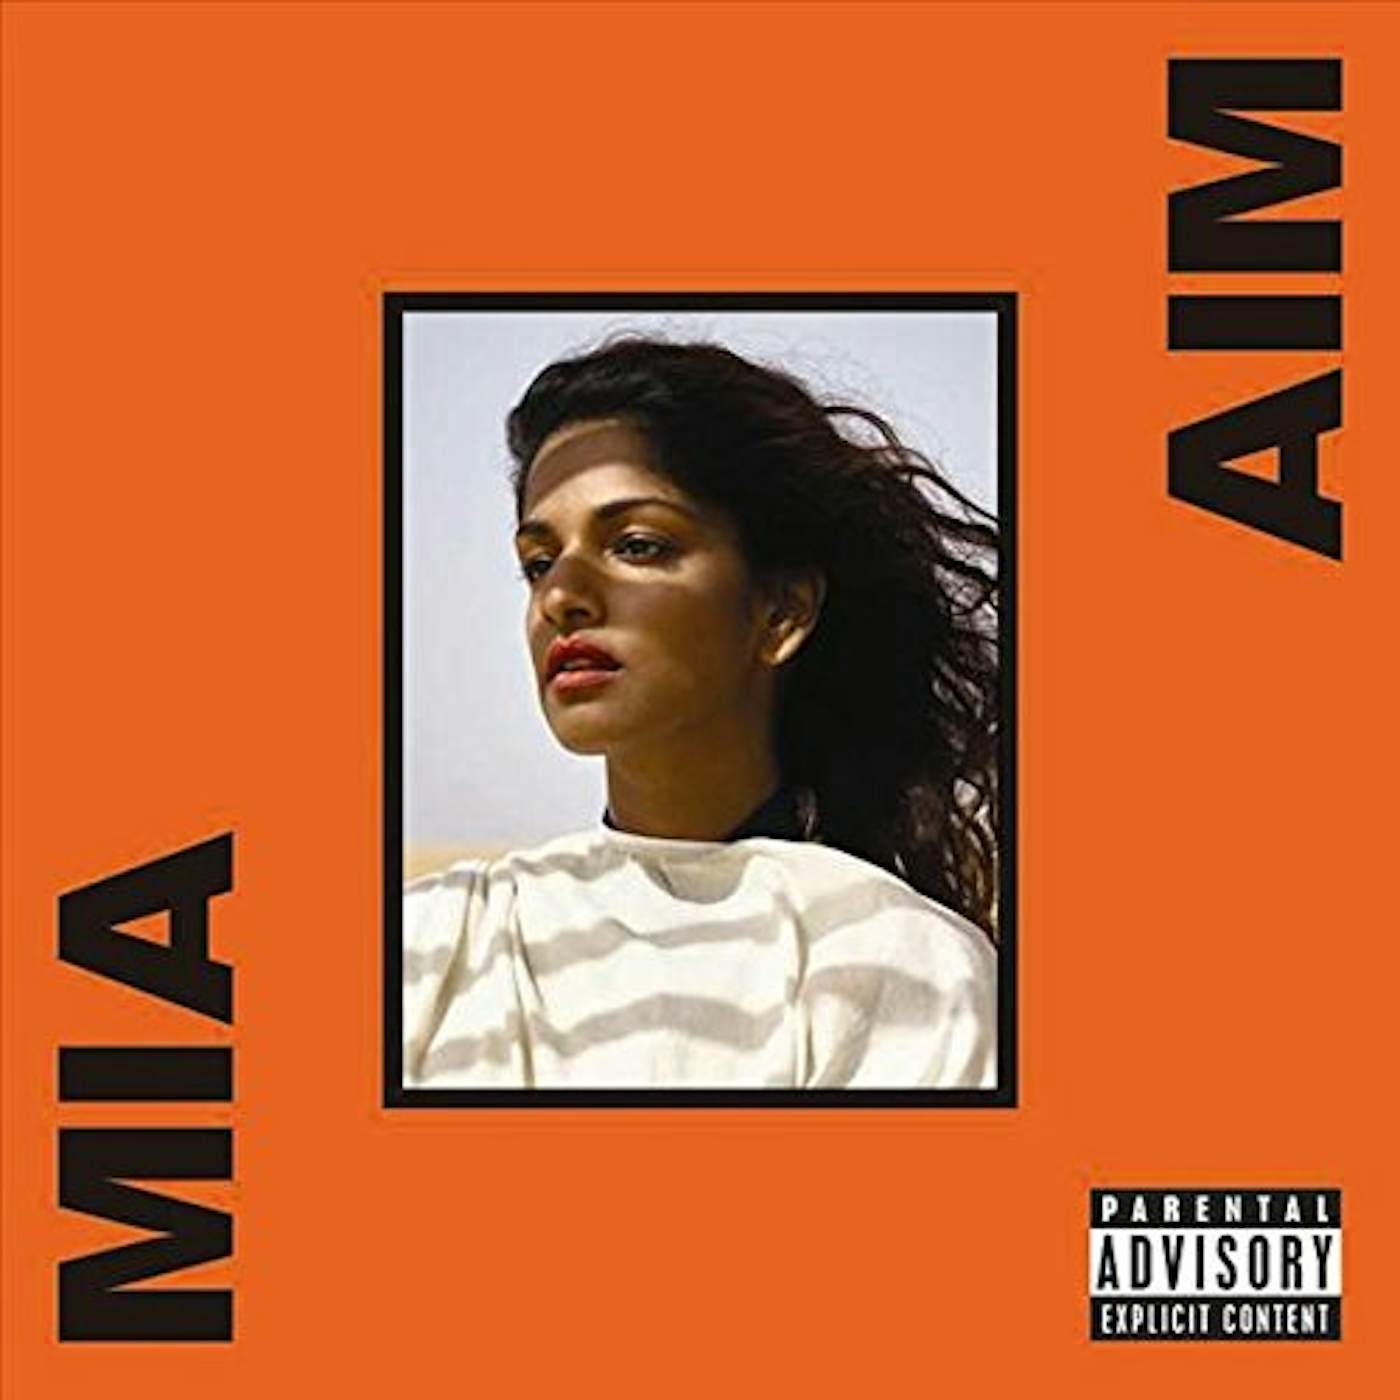 MIA (M.I.A.) AIM CD